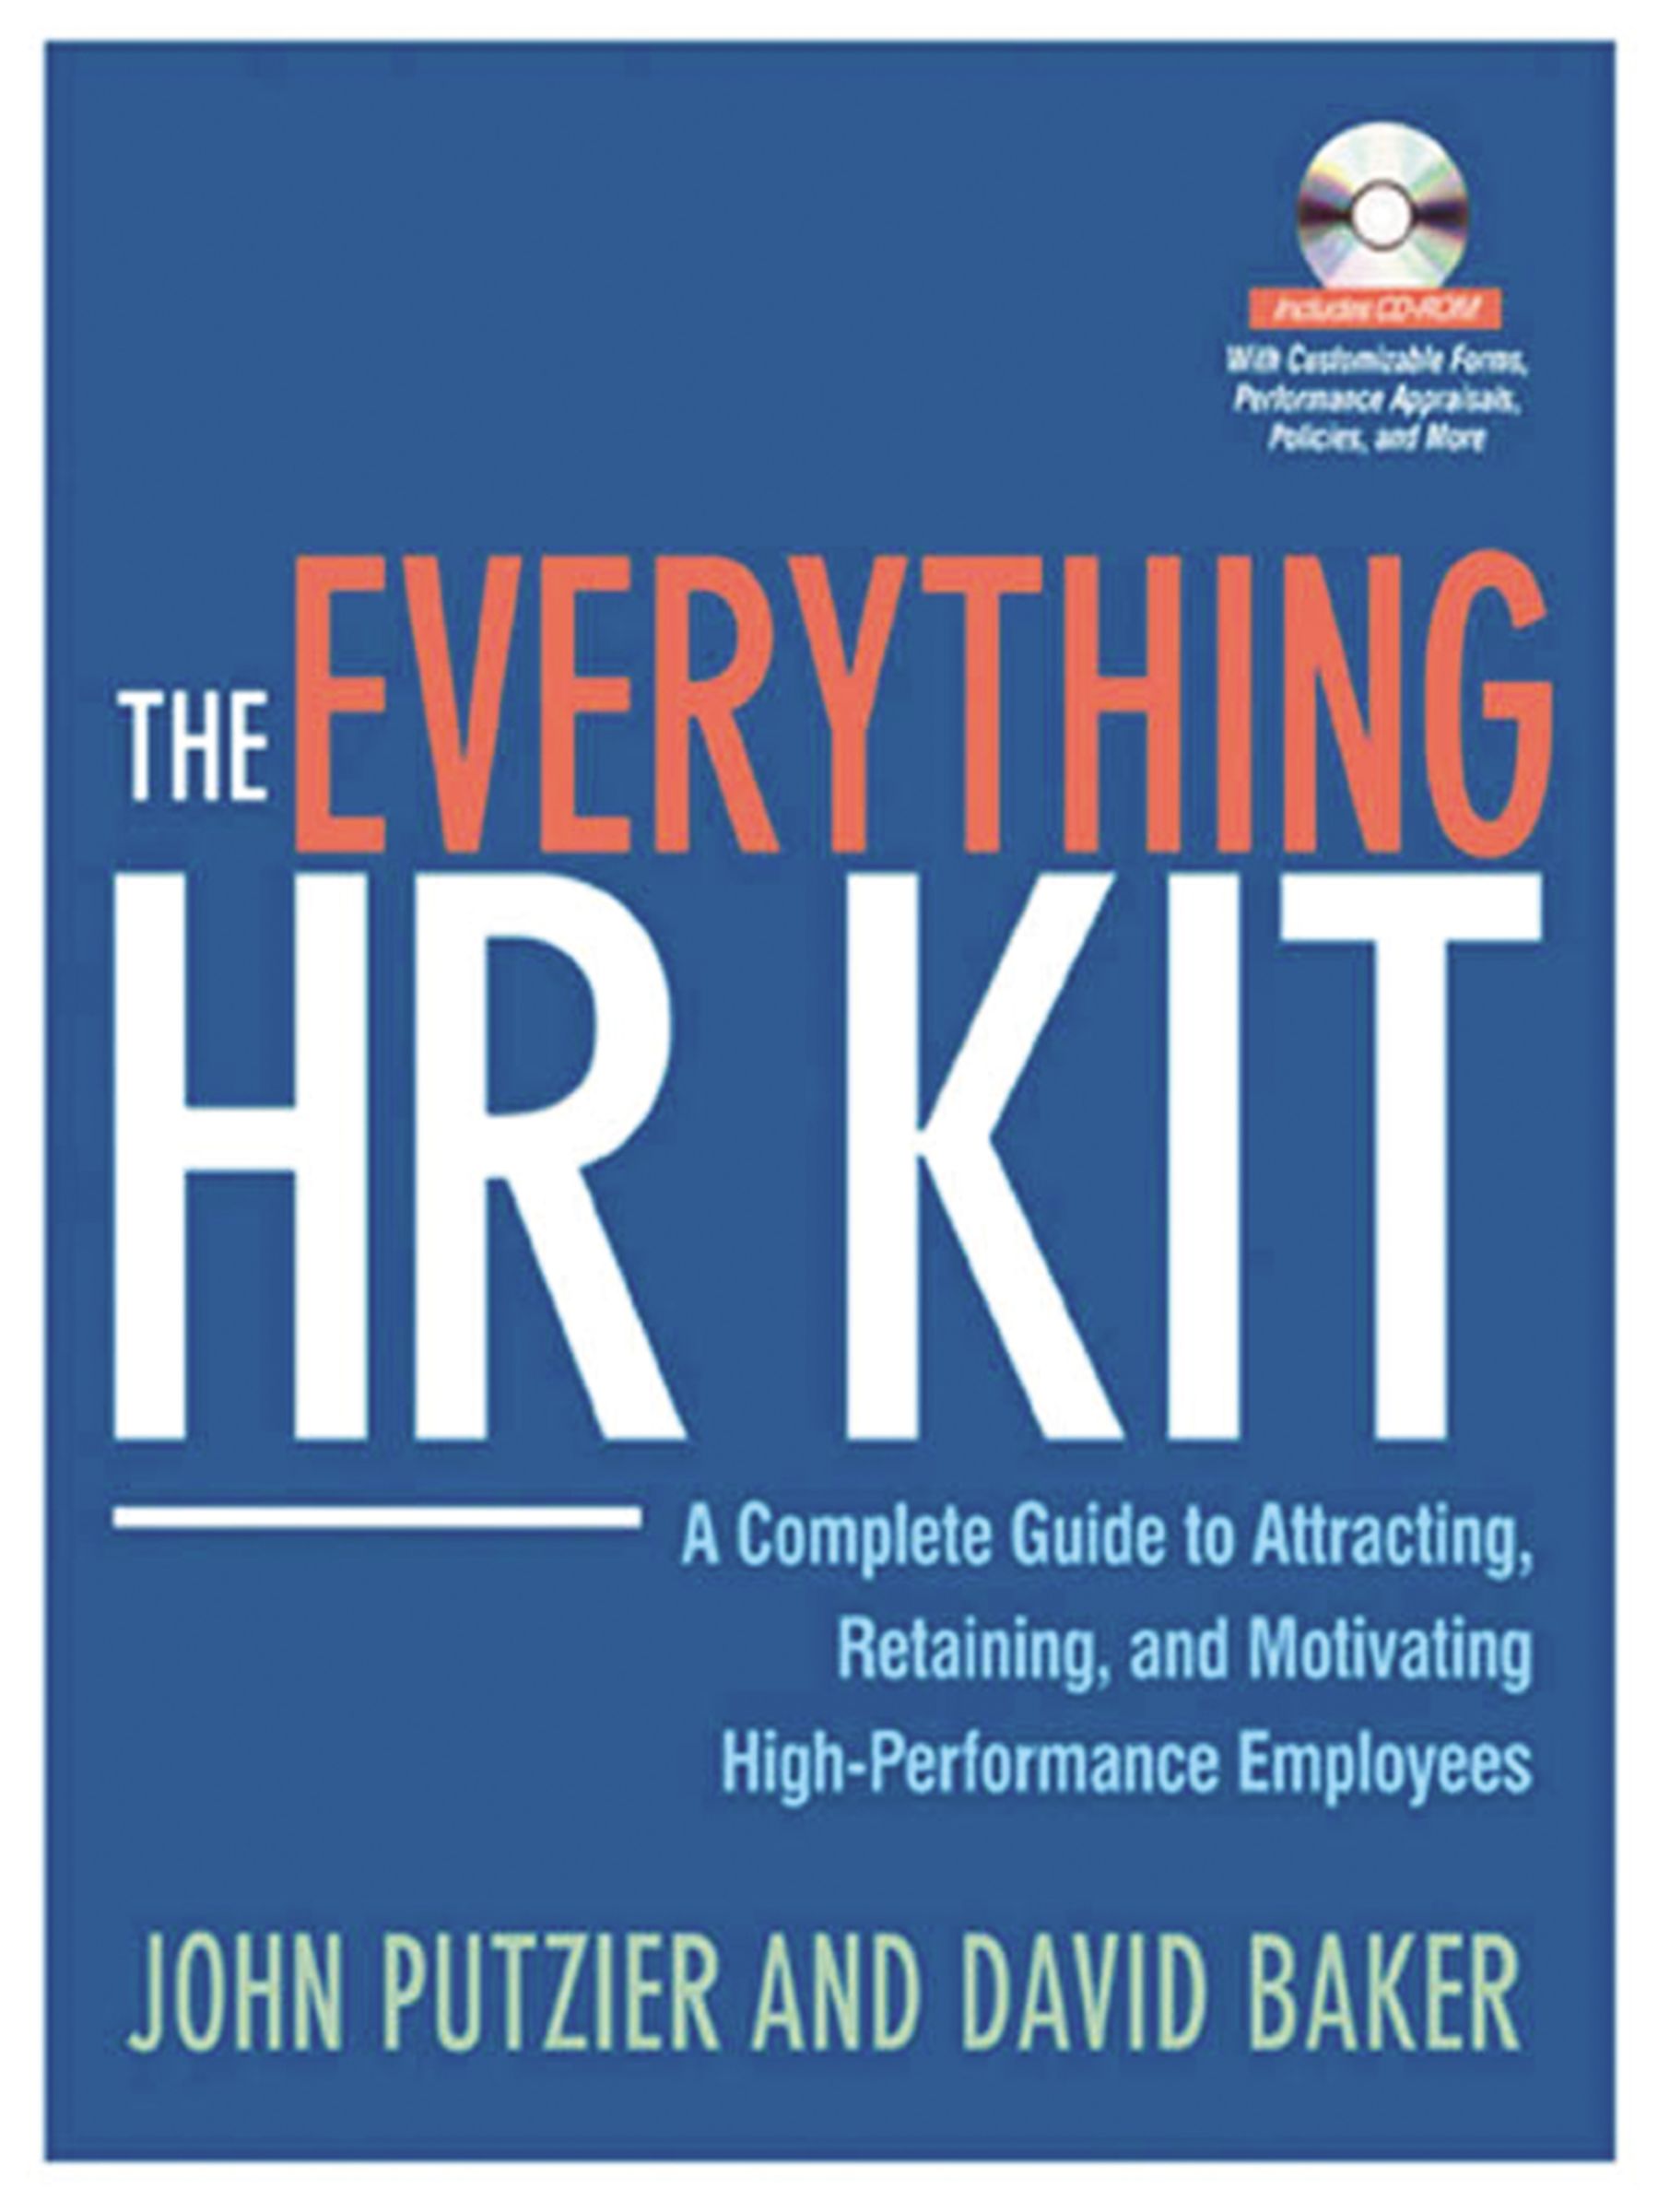 The Everything HR Kit